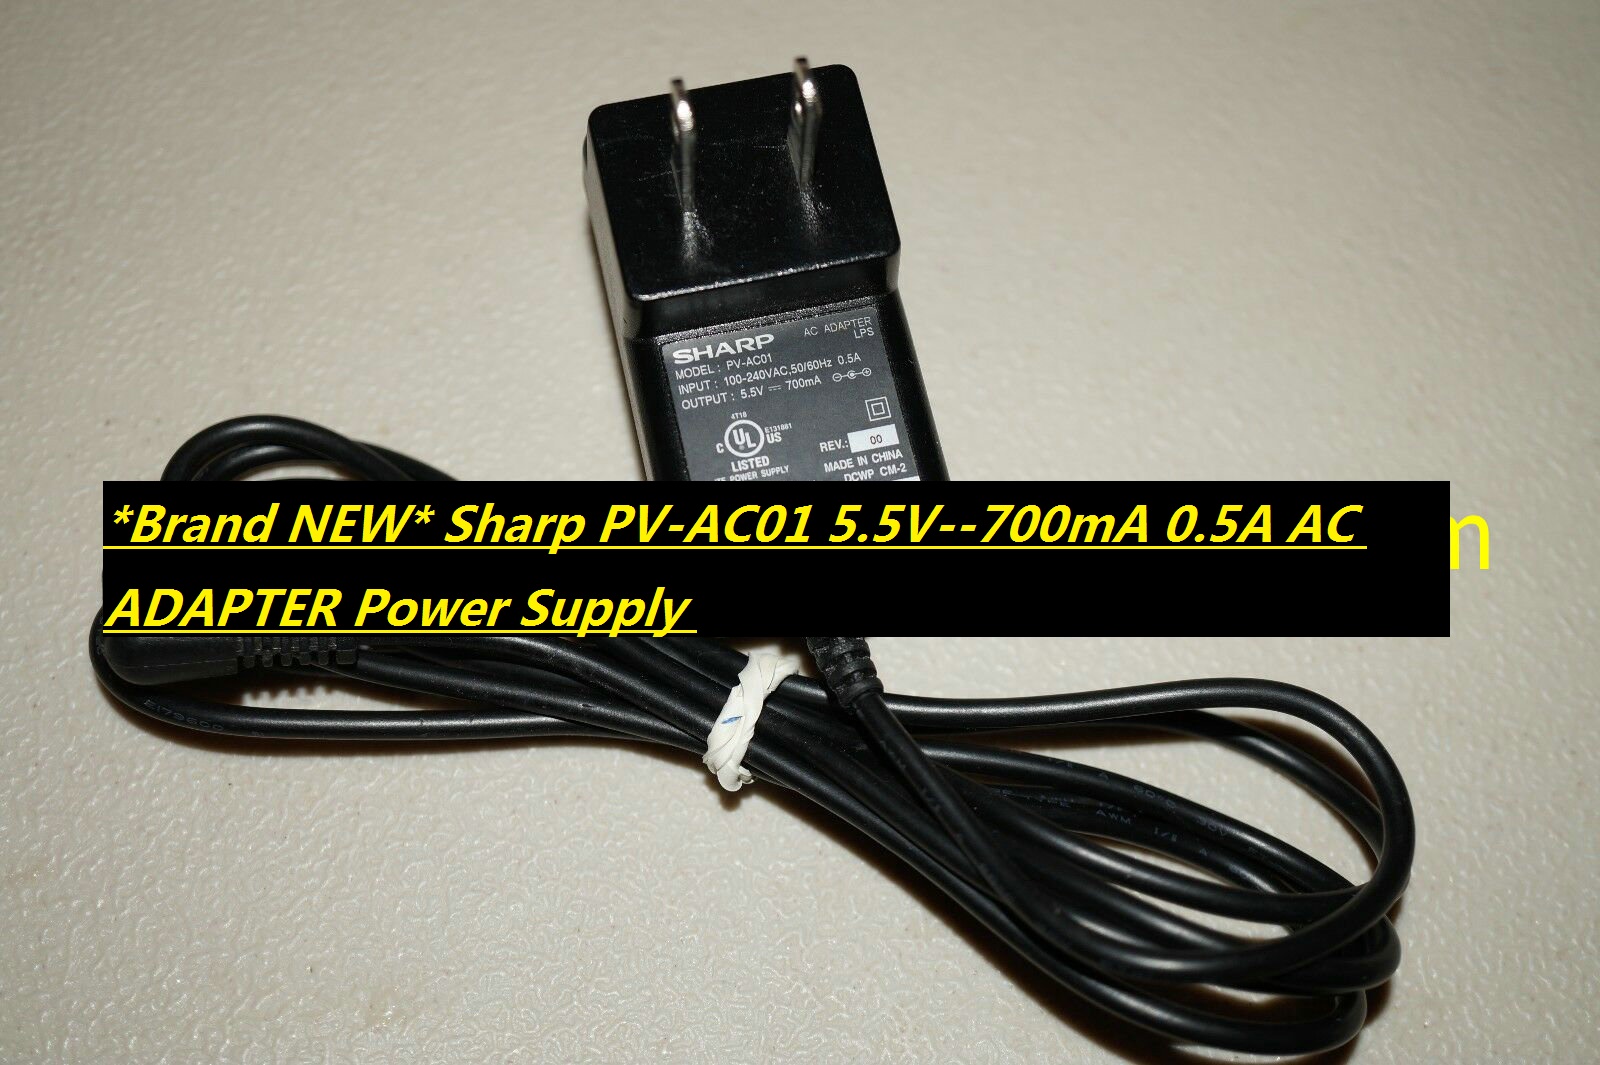 *Brand NEW* Sharp PV-AC01 5.5V--700mA 0.5A AC ADAPTER Power Supply - Click Image to Close